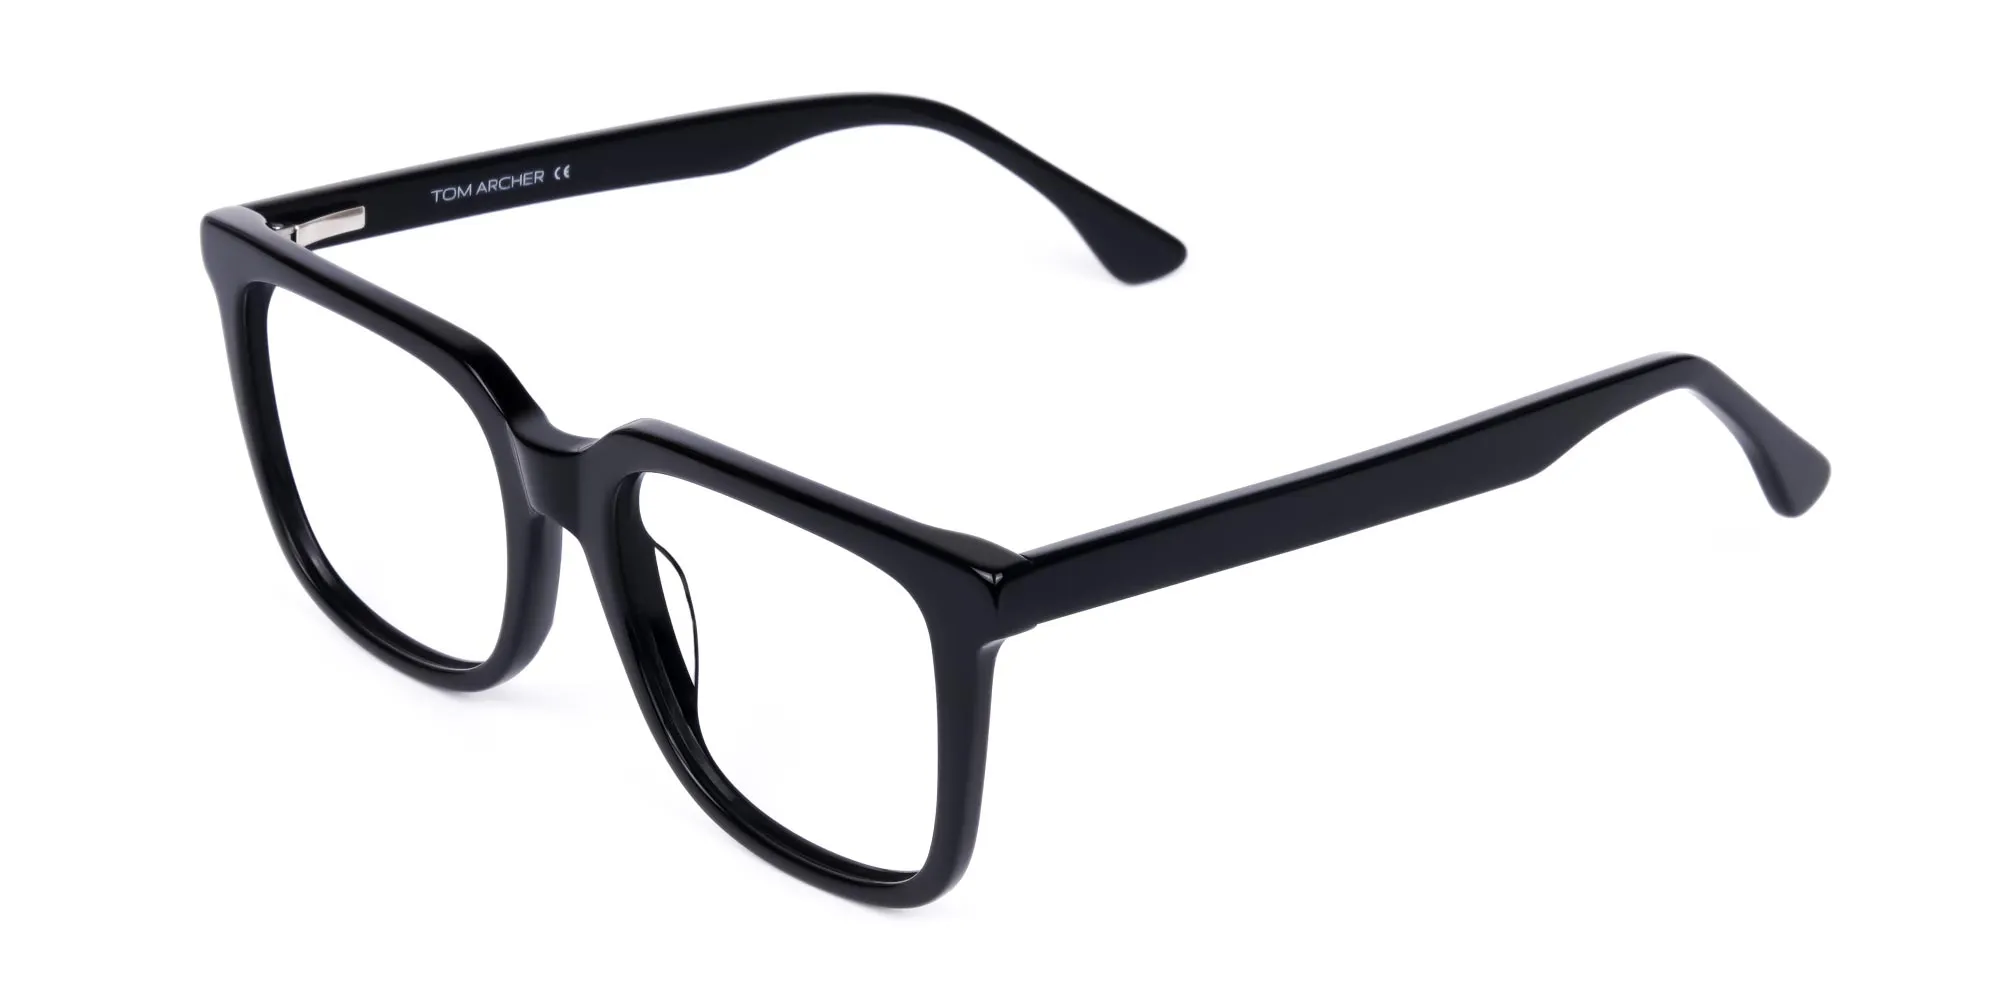 Fashionable Glasses | Specscart